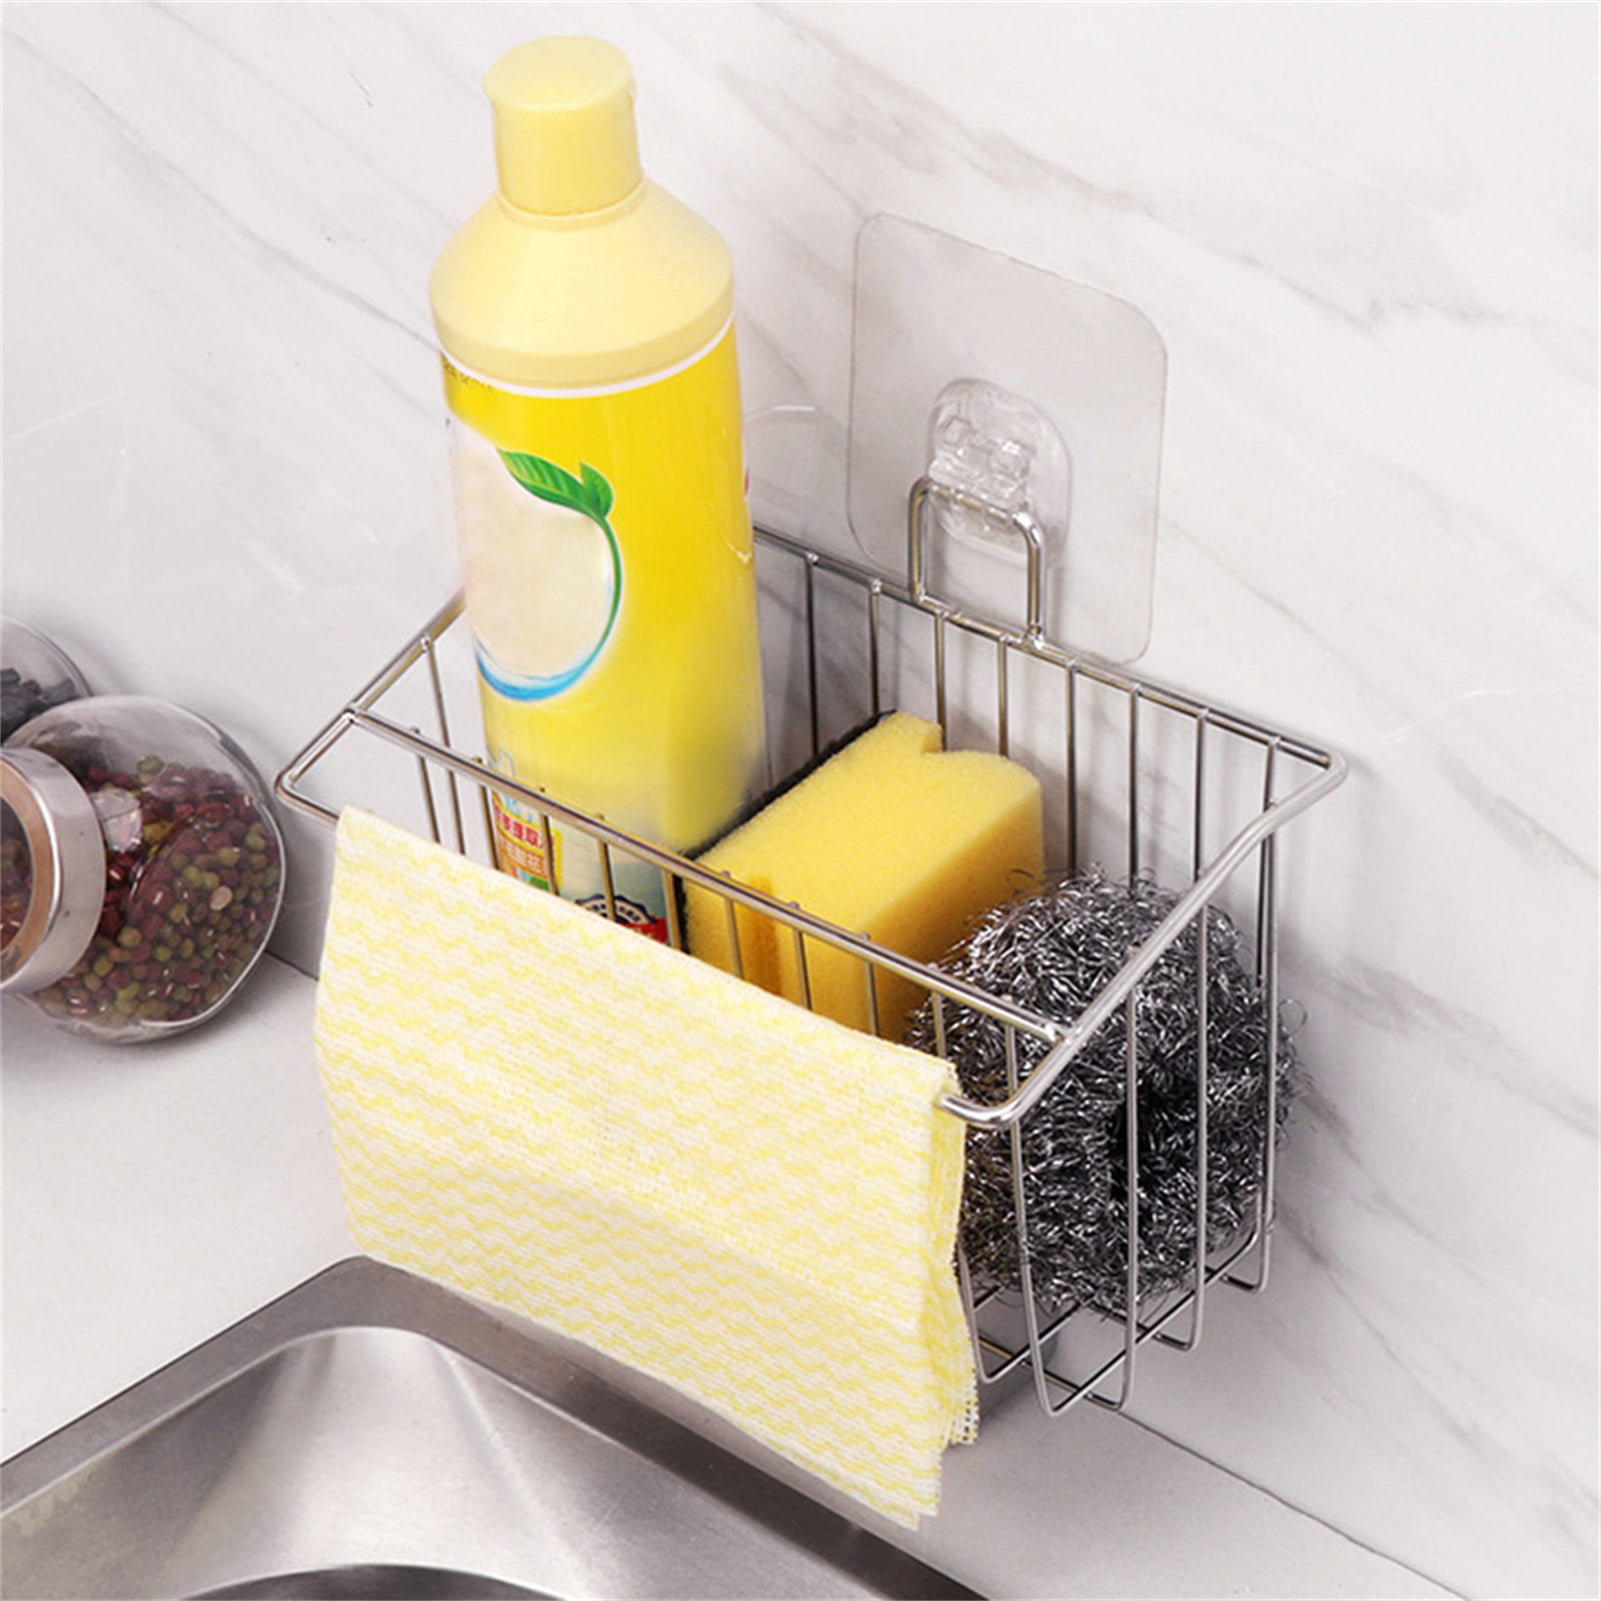 stusgo No Drilling Sponge Caddy, 2 in 1 Sink Sponge Holder for Kitchen  Sink, Adhesive Sink Organizer for Dishwashing Brush Soap, SUS304 Stainless